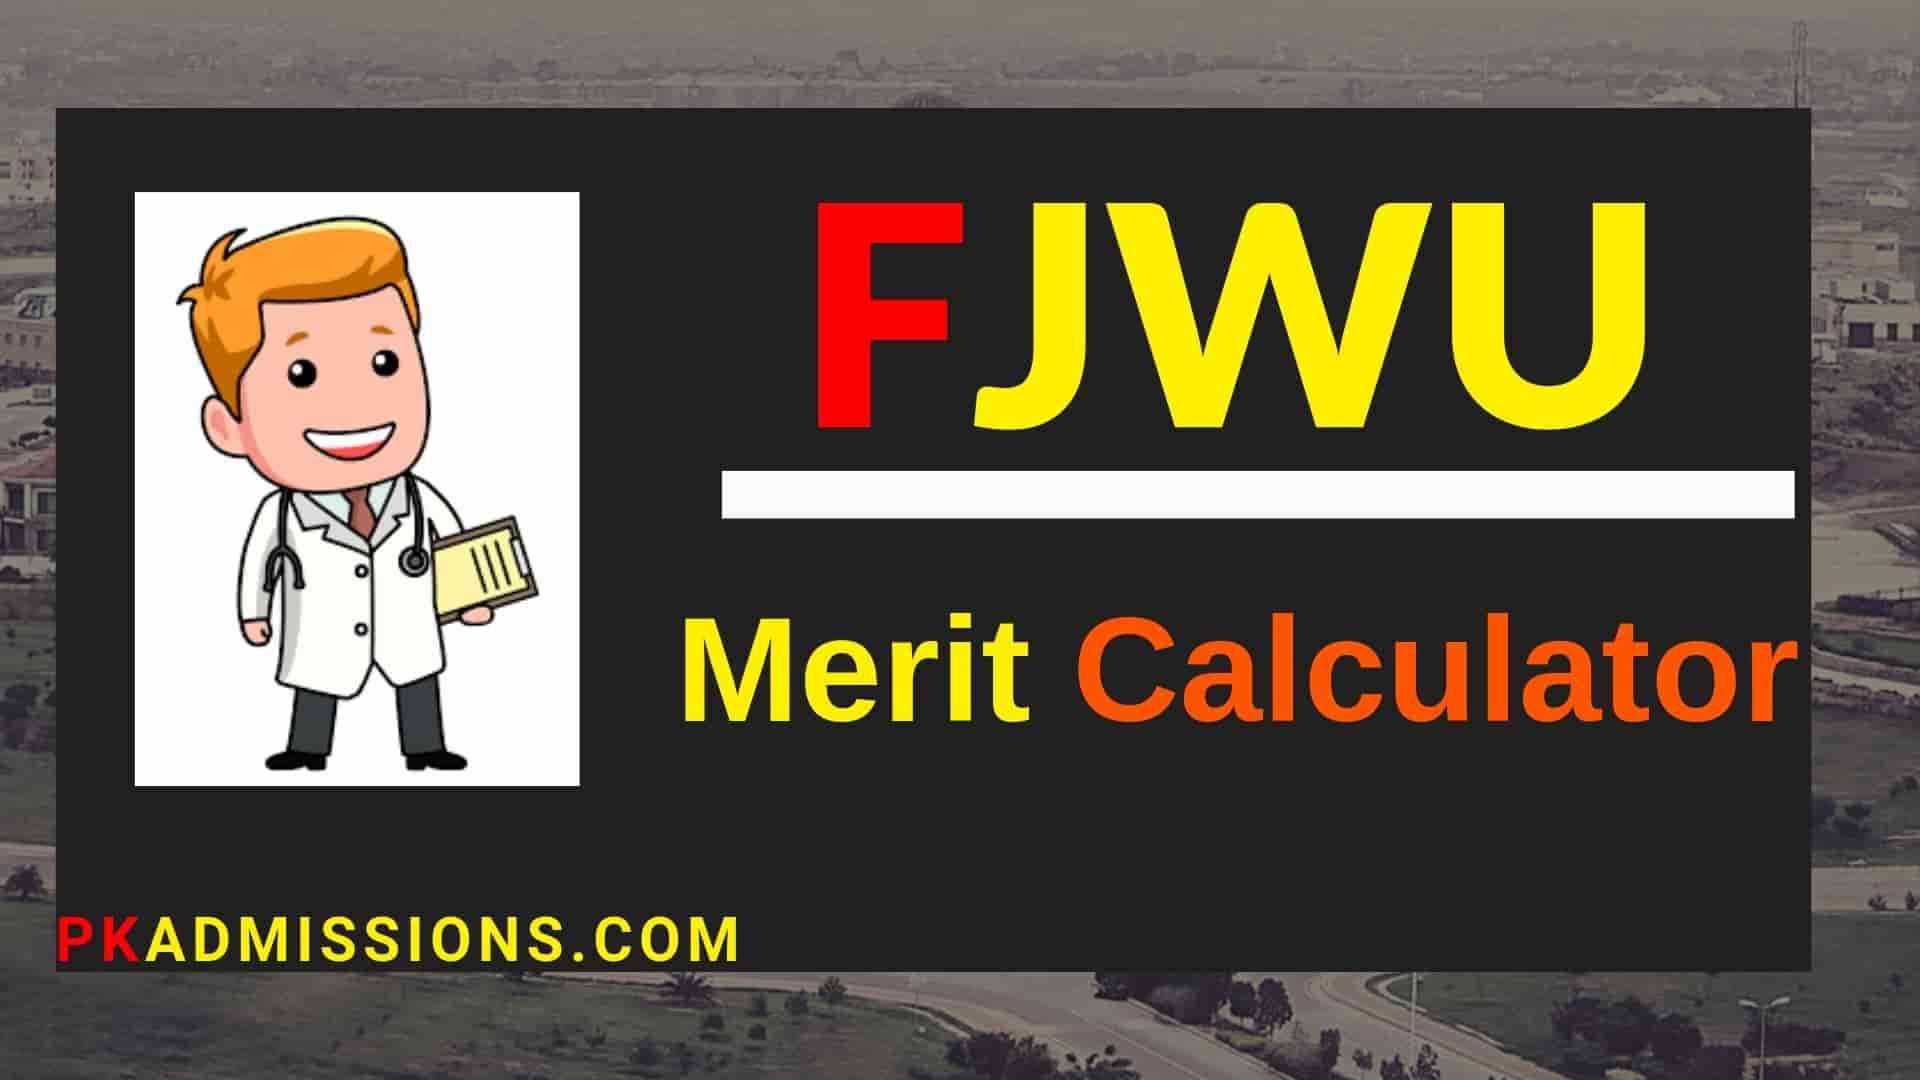 merit-calculator-of-fjwu